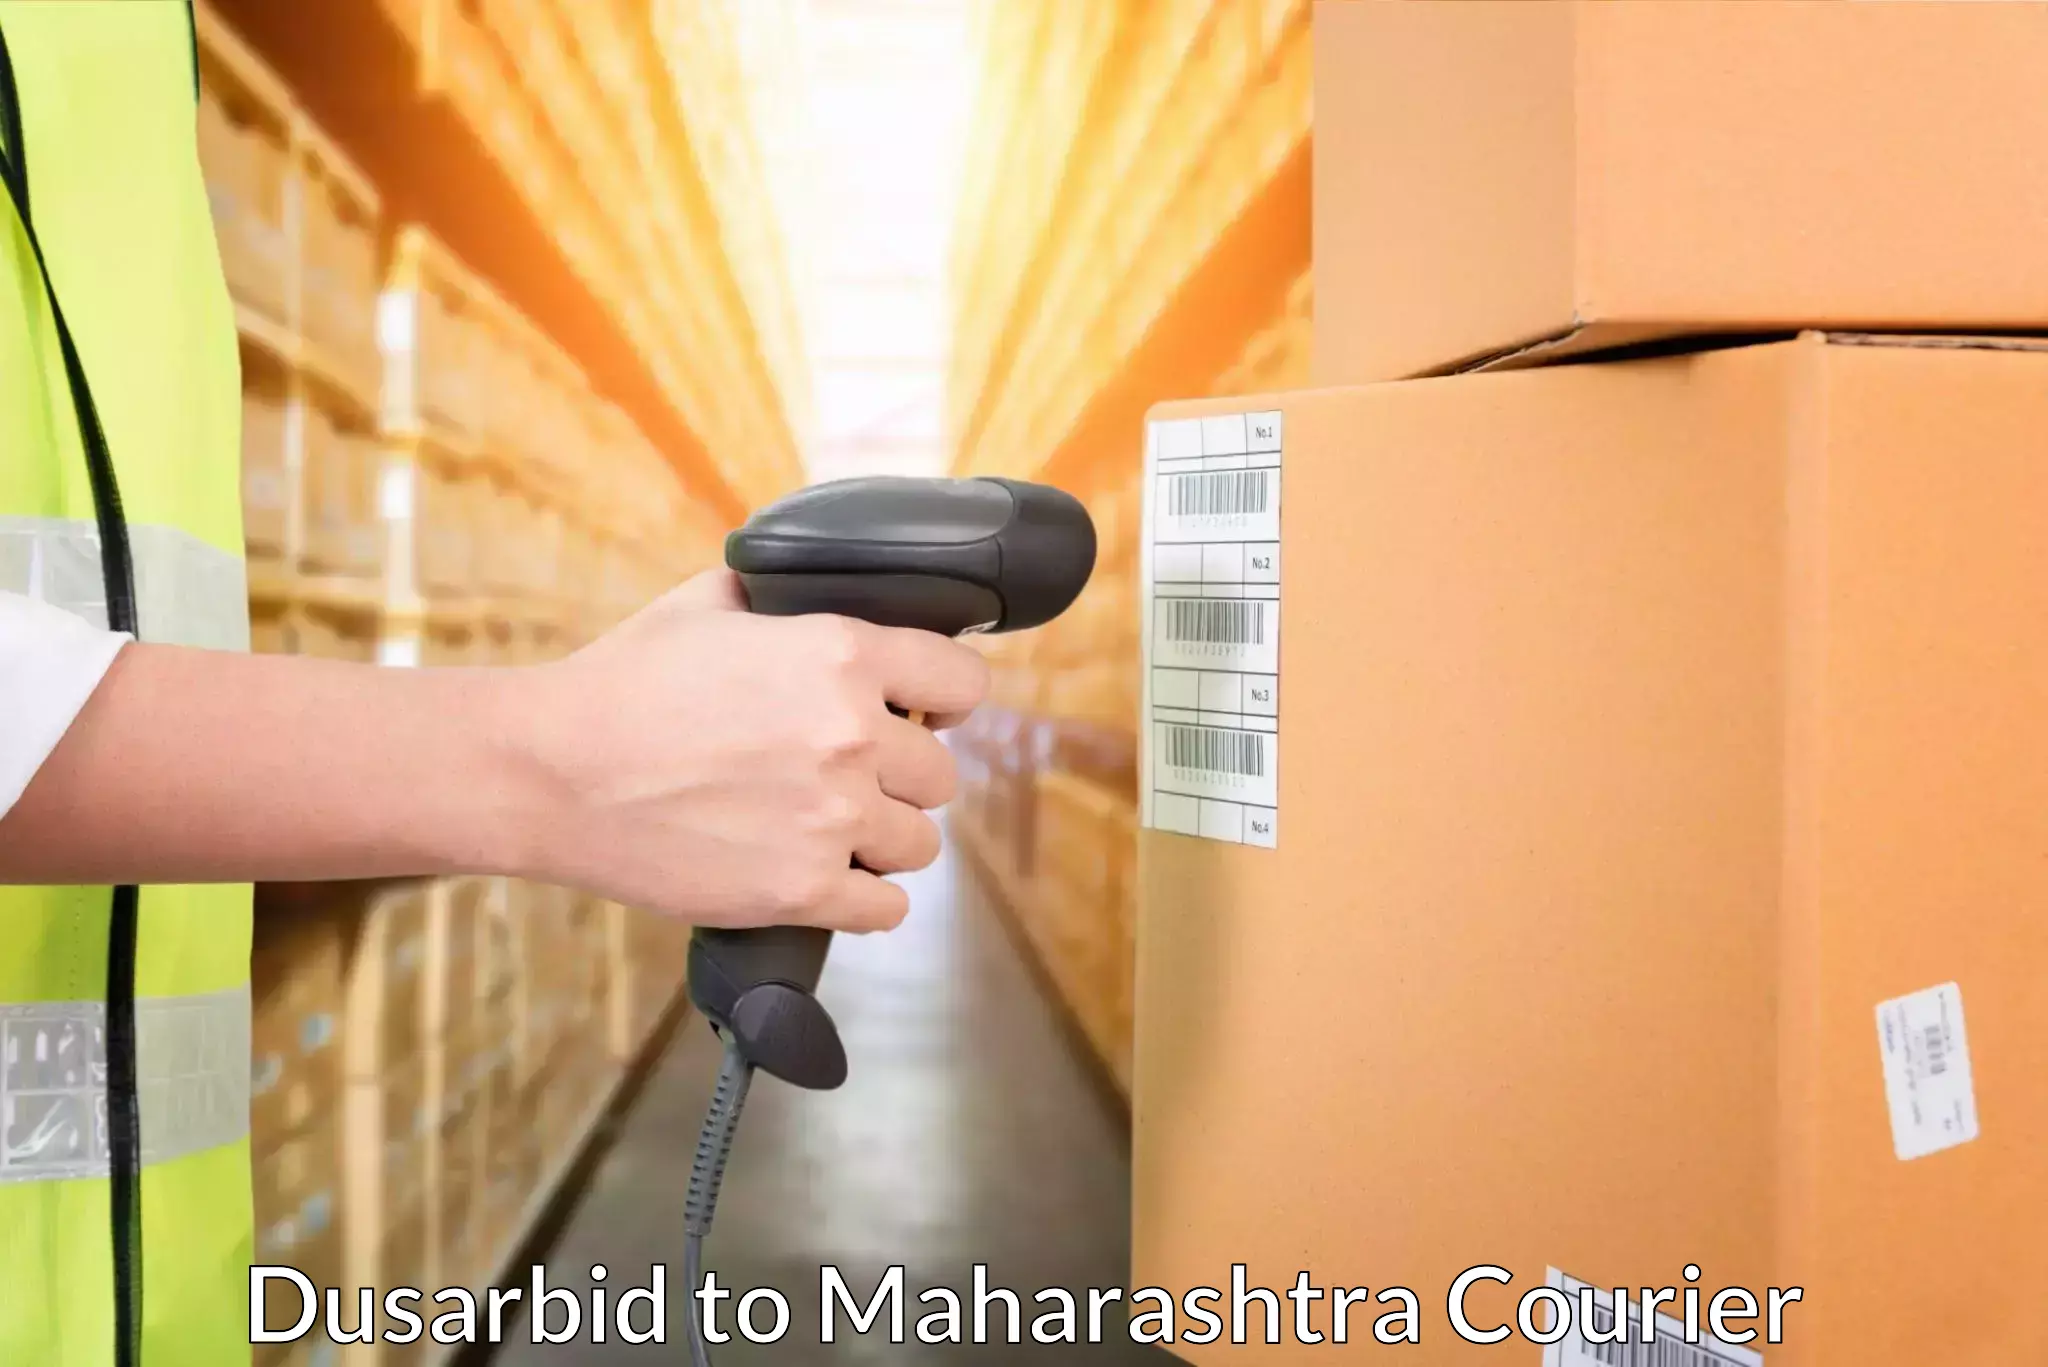 Supply chain delivery in Dusarbid to Pimpri Chinchwad